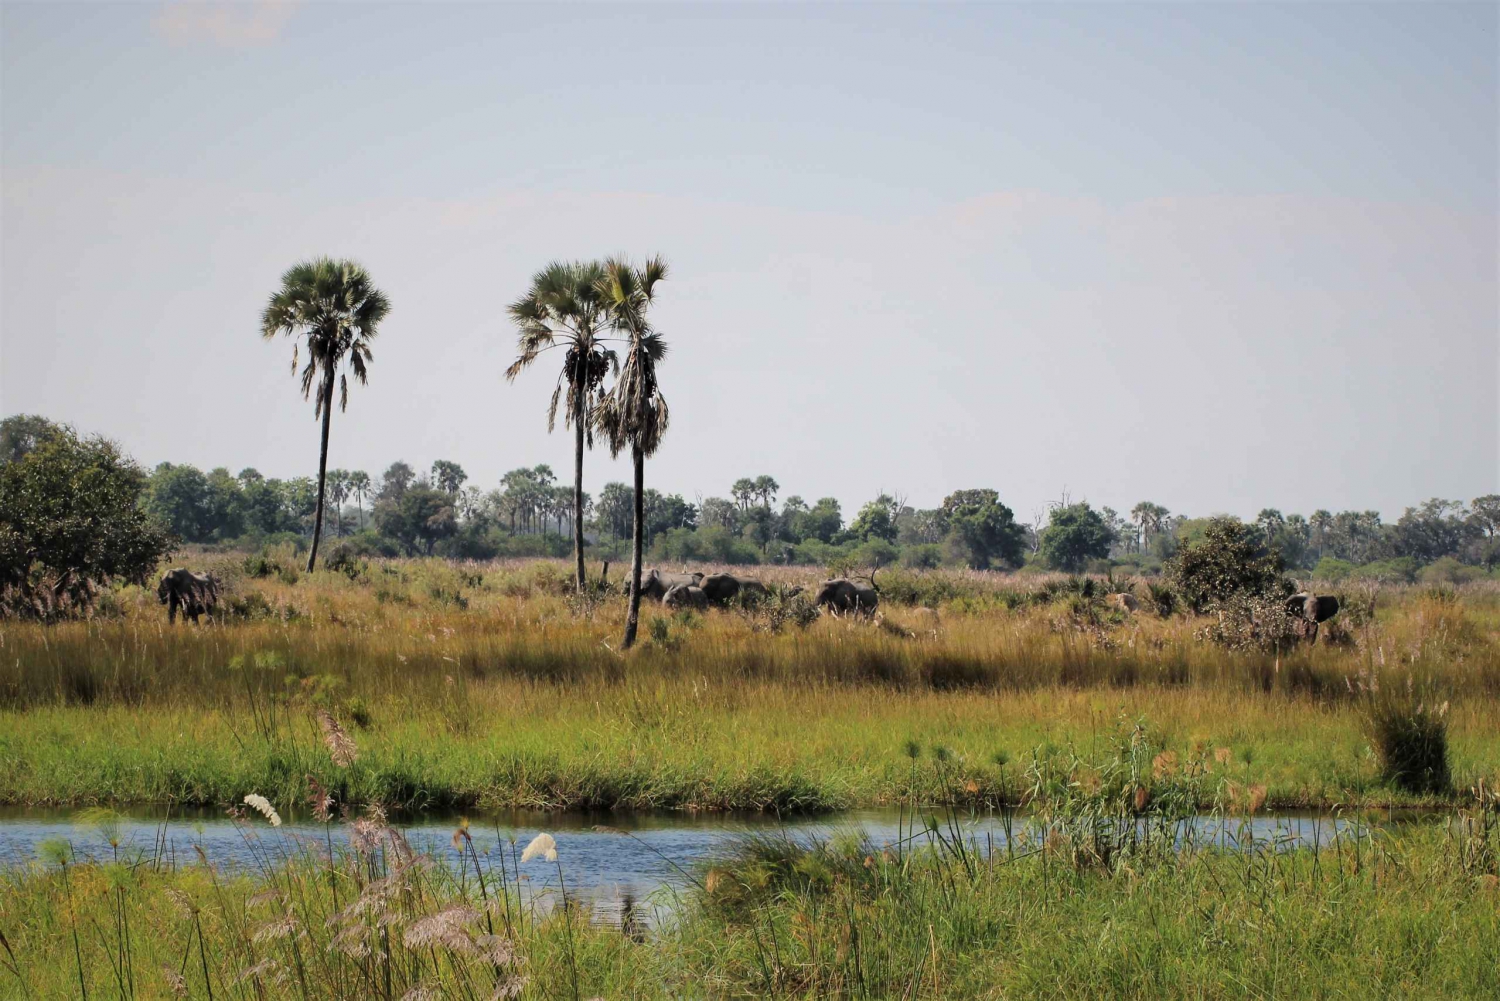 Okavango Delta: Wildlife Boat Tour to Chief's Island